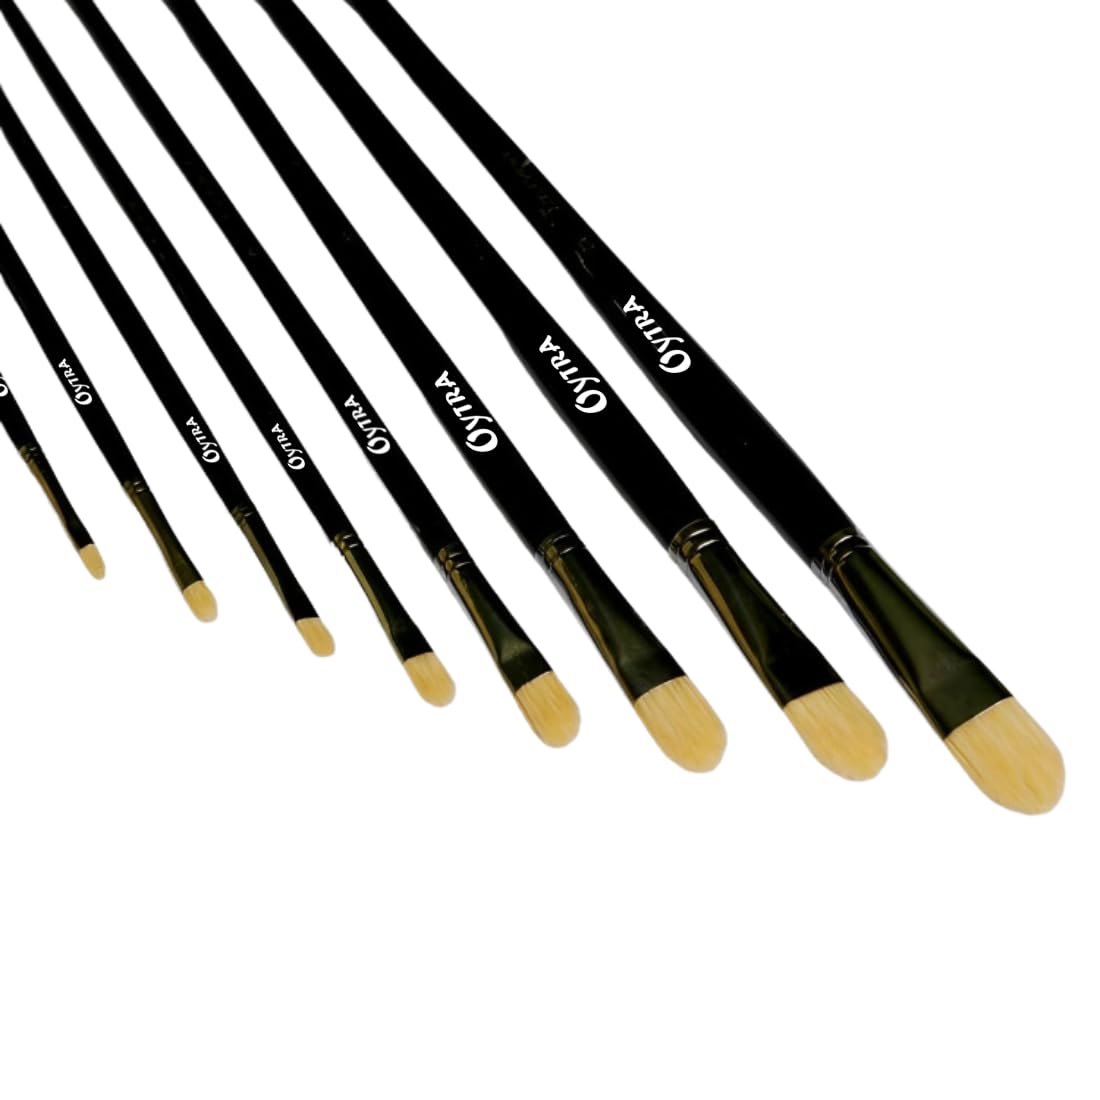 Oytra Detailing Paint Brushes Set - 5pcs Professional Miniature Liner